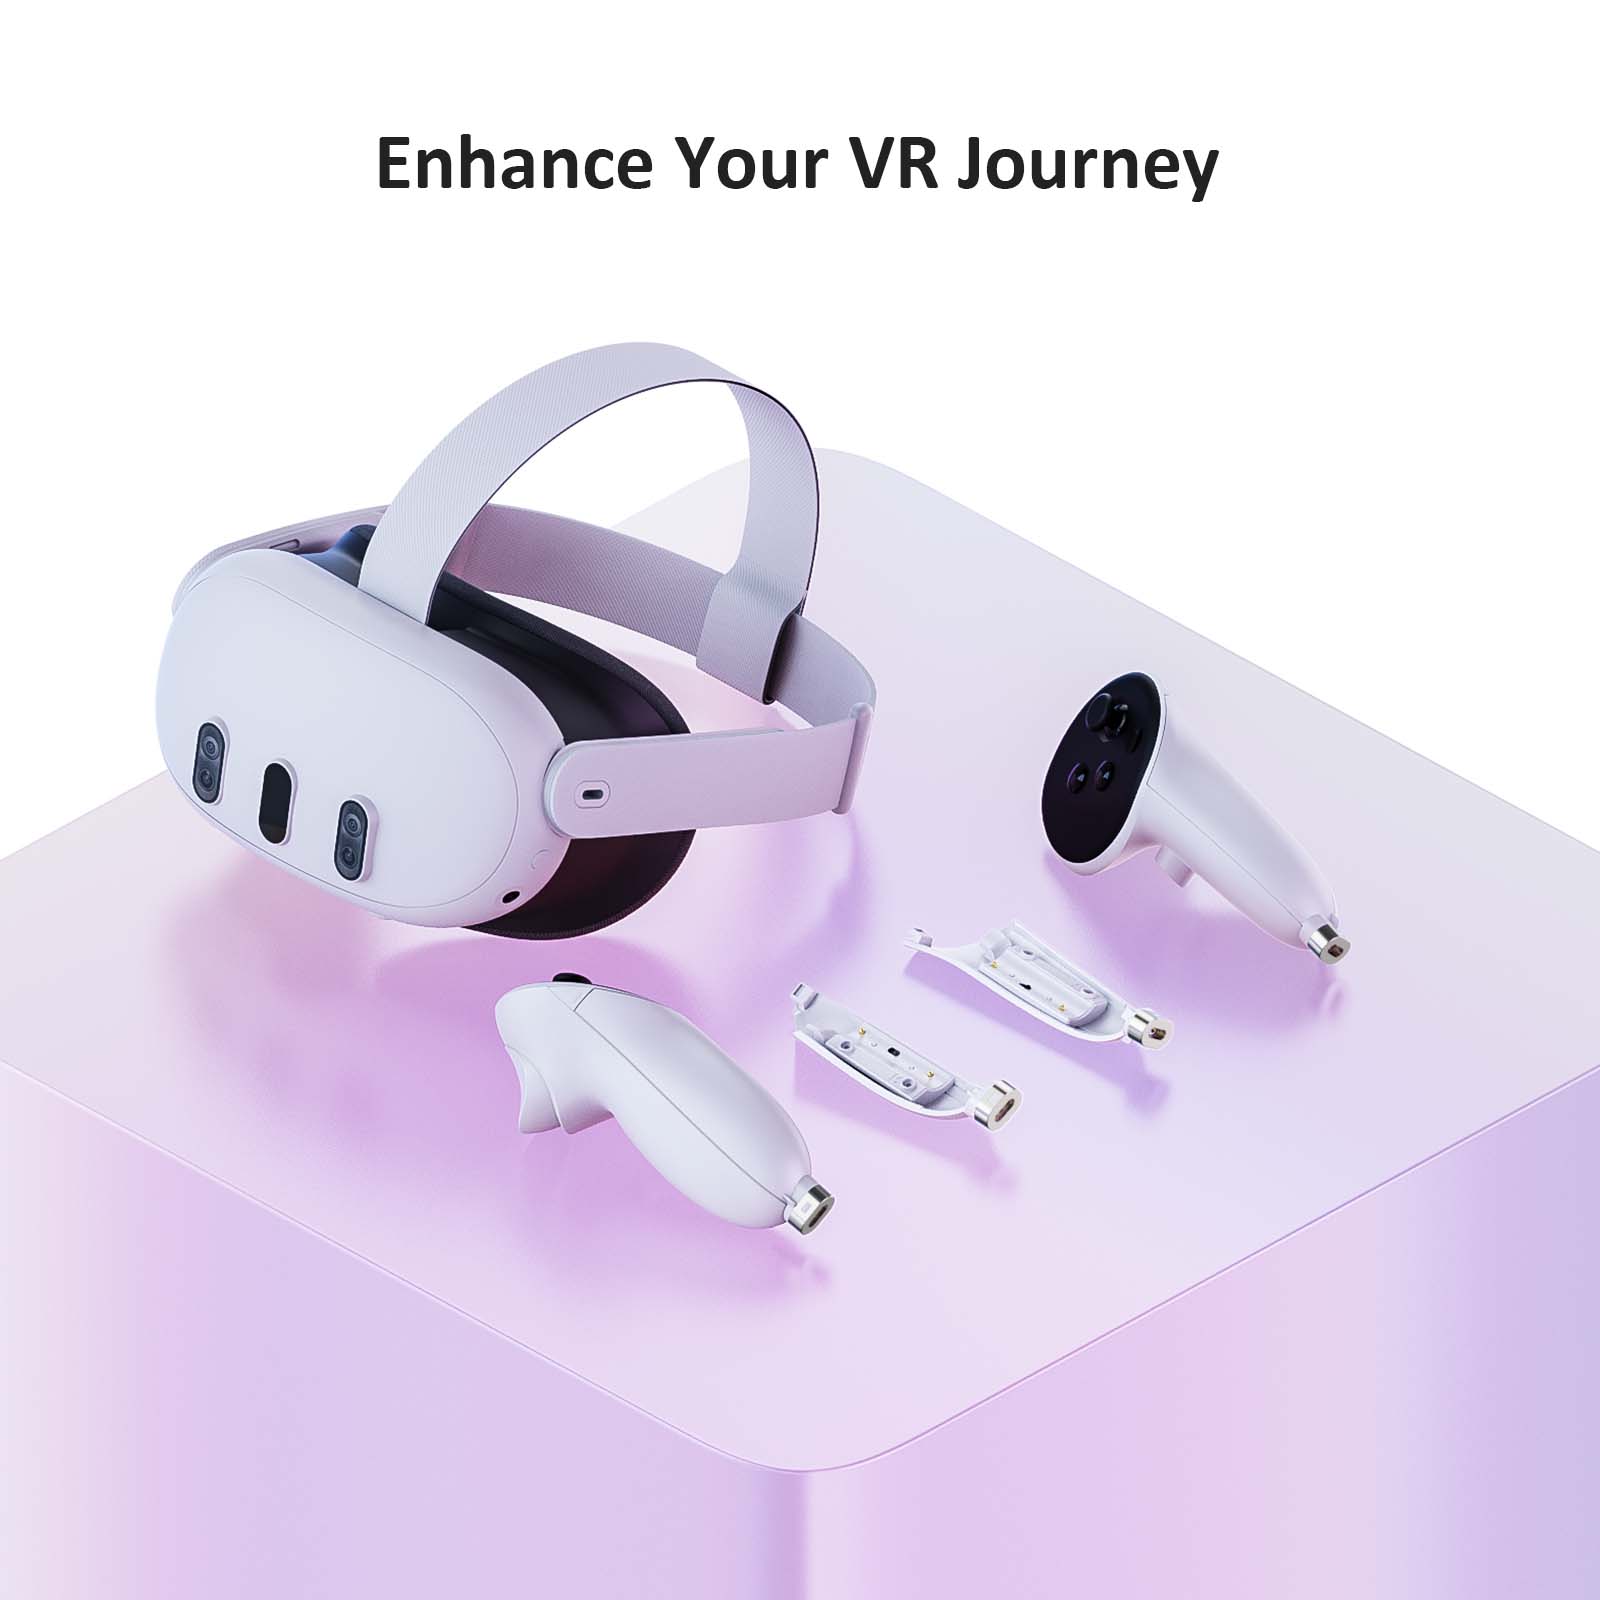 enhance your VR journey